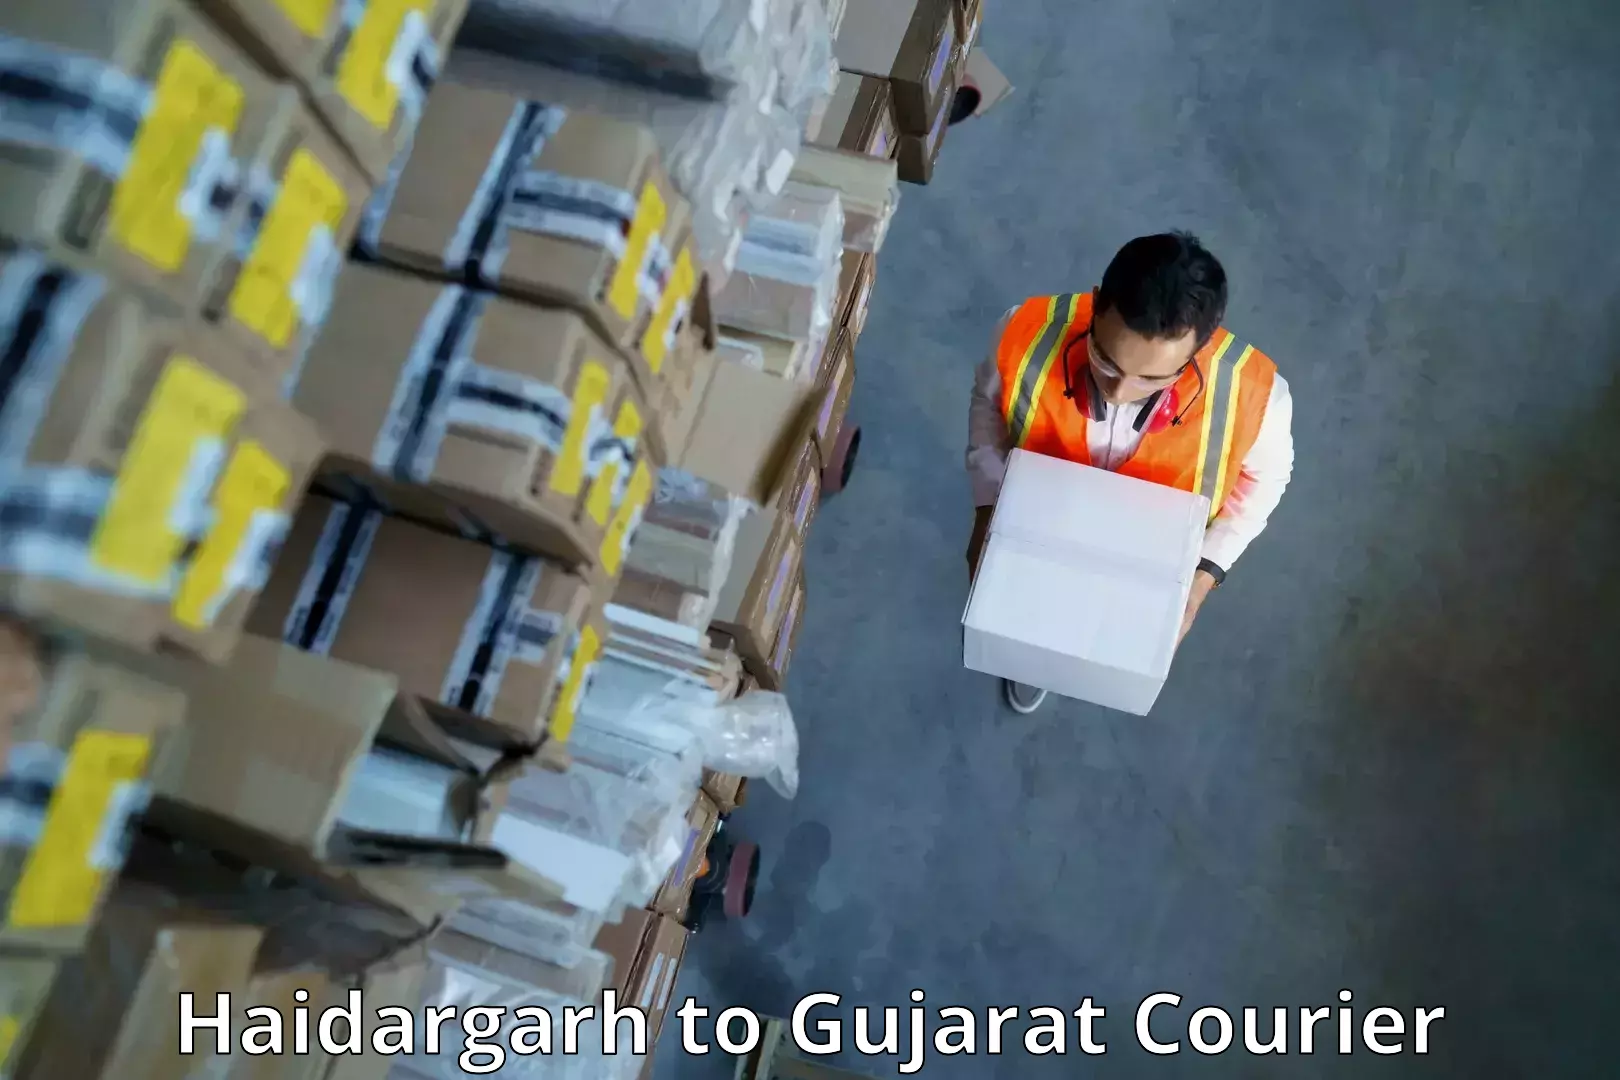 Express delivery capabilities Haidargarh to Manavadar